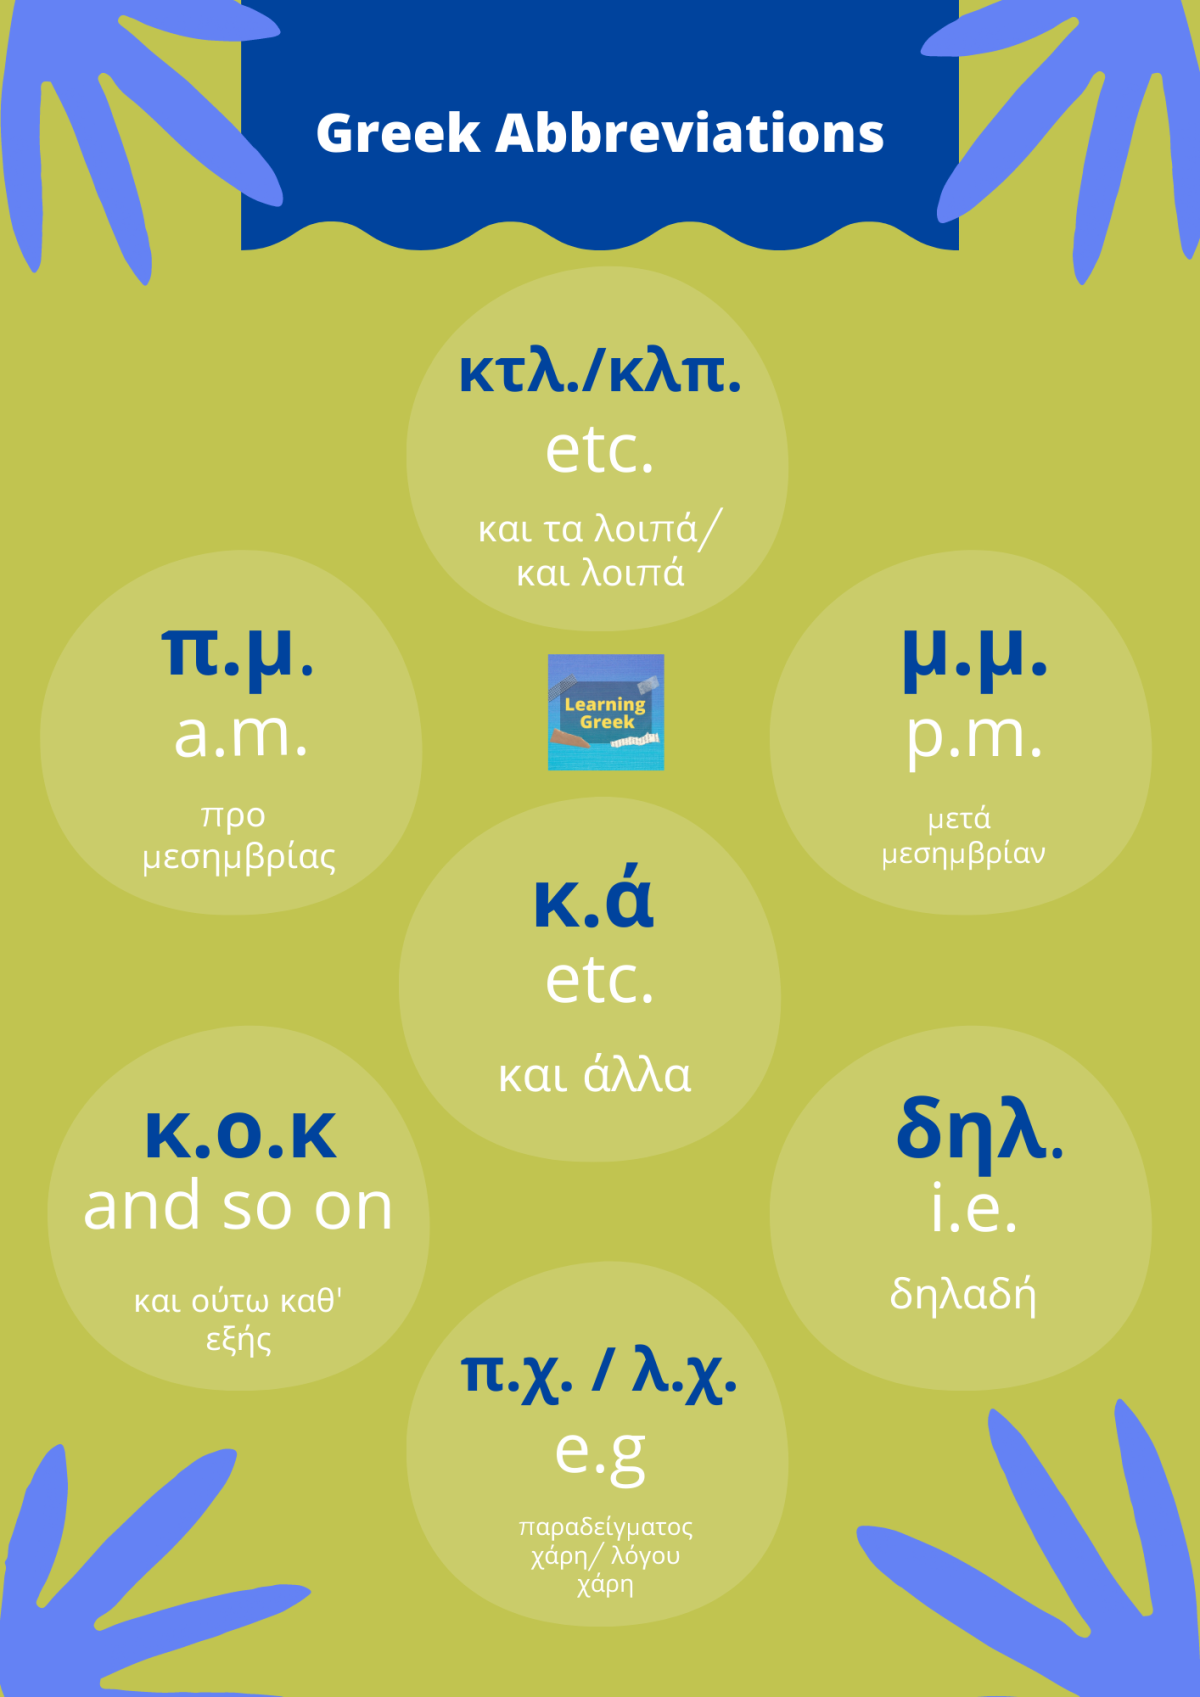 Most Common Greek Abbreviations